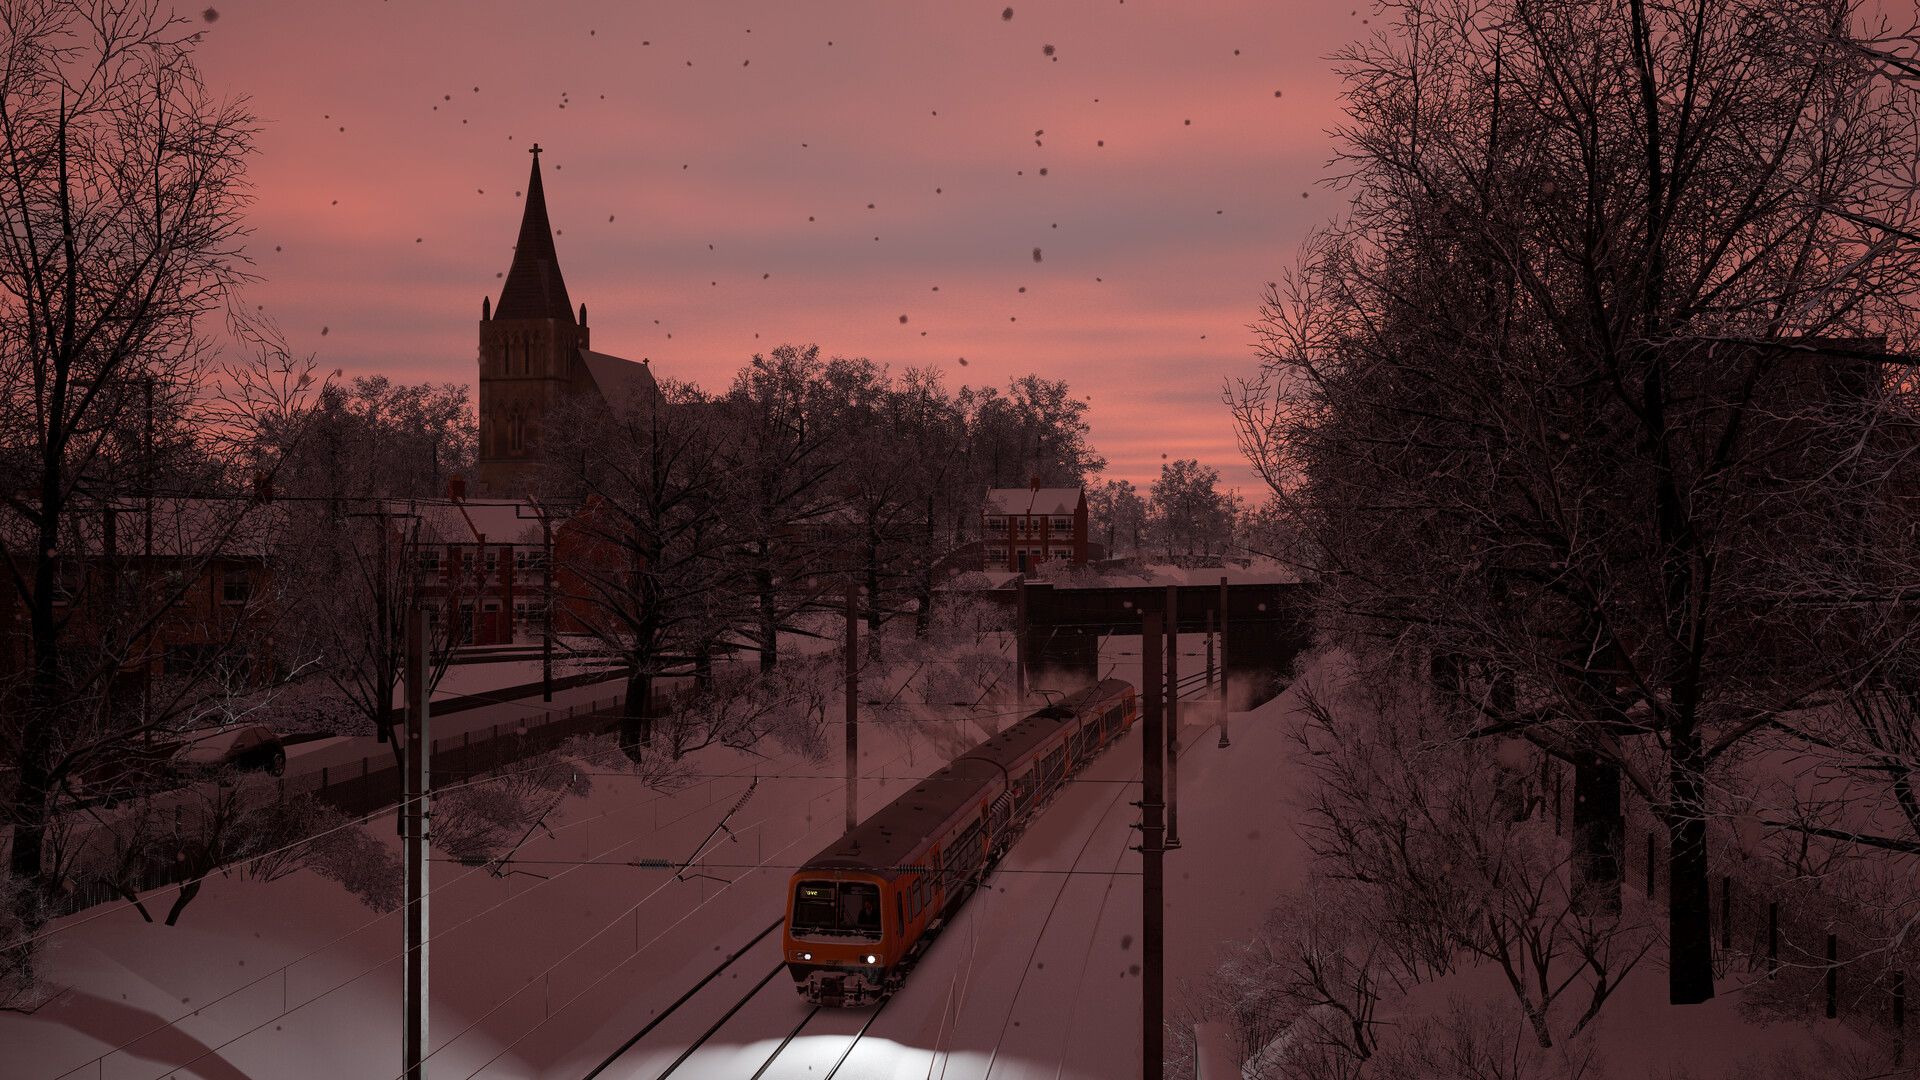 Train Sim World 3 - Birmingham Cross-City Line: Lichfield - Bromsgrove & Redditch Route Add-On DLC Steam CD Key 22.54 usd